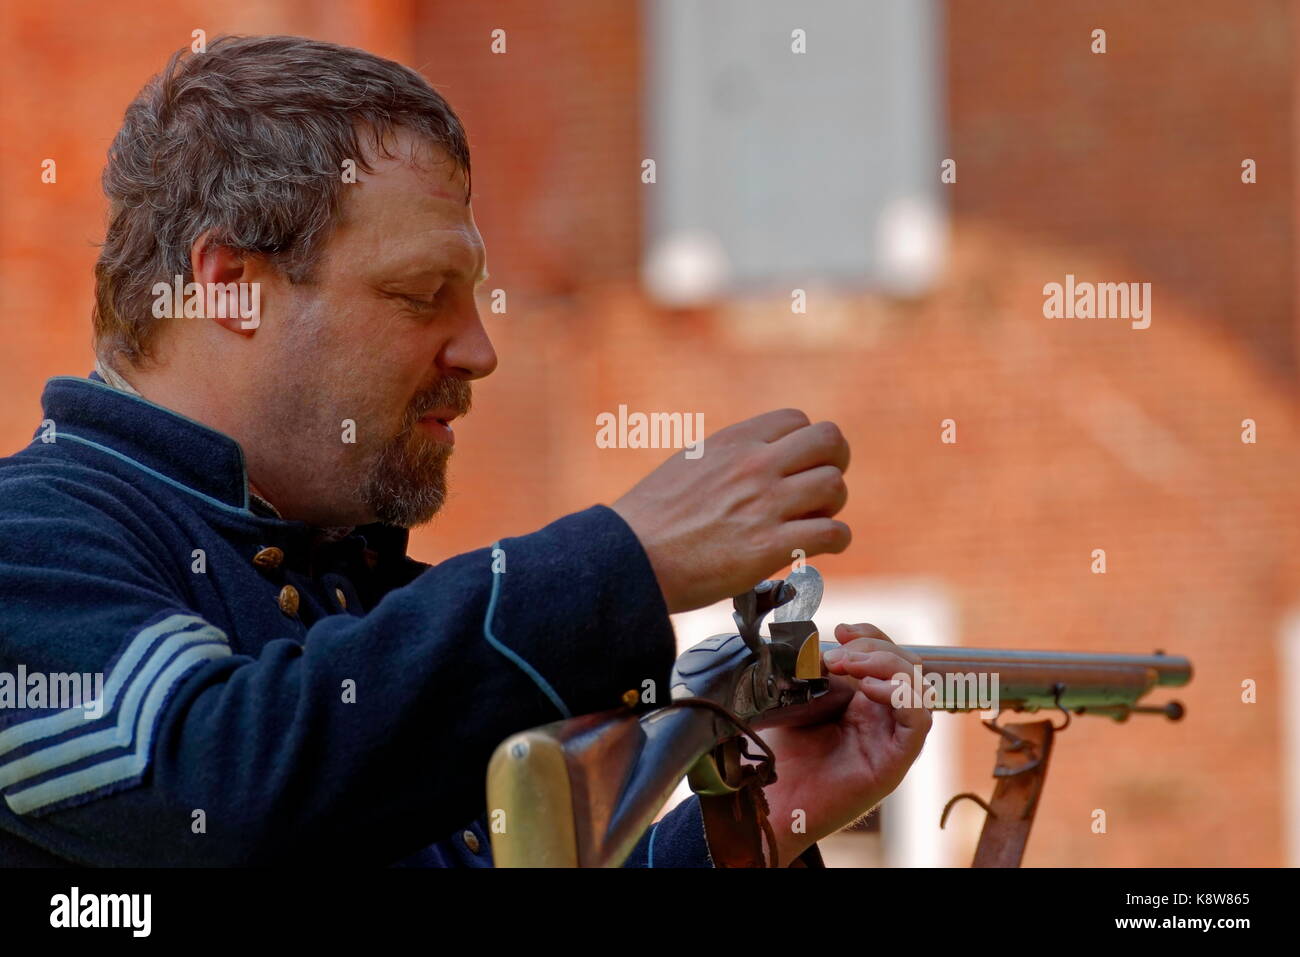 Civil war re-enactor in Union uniform demonstrates a flintlock  muzzle loading musket. Stock Photo